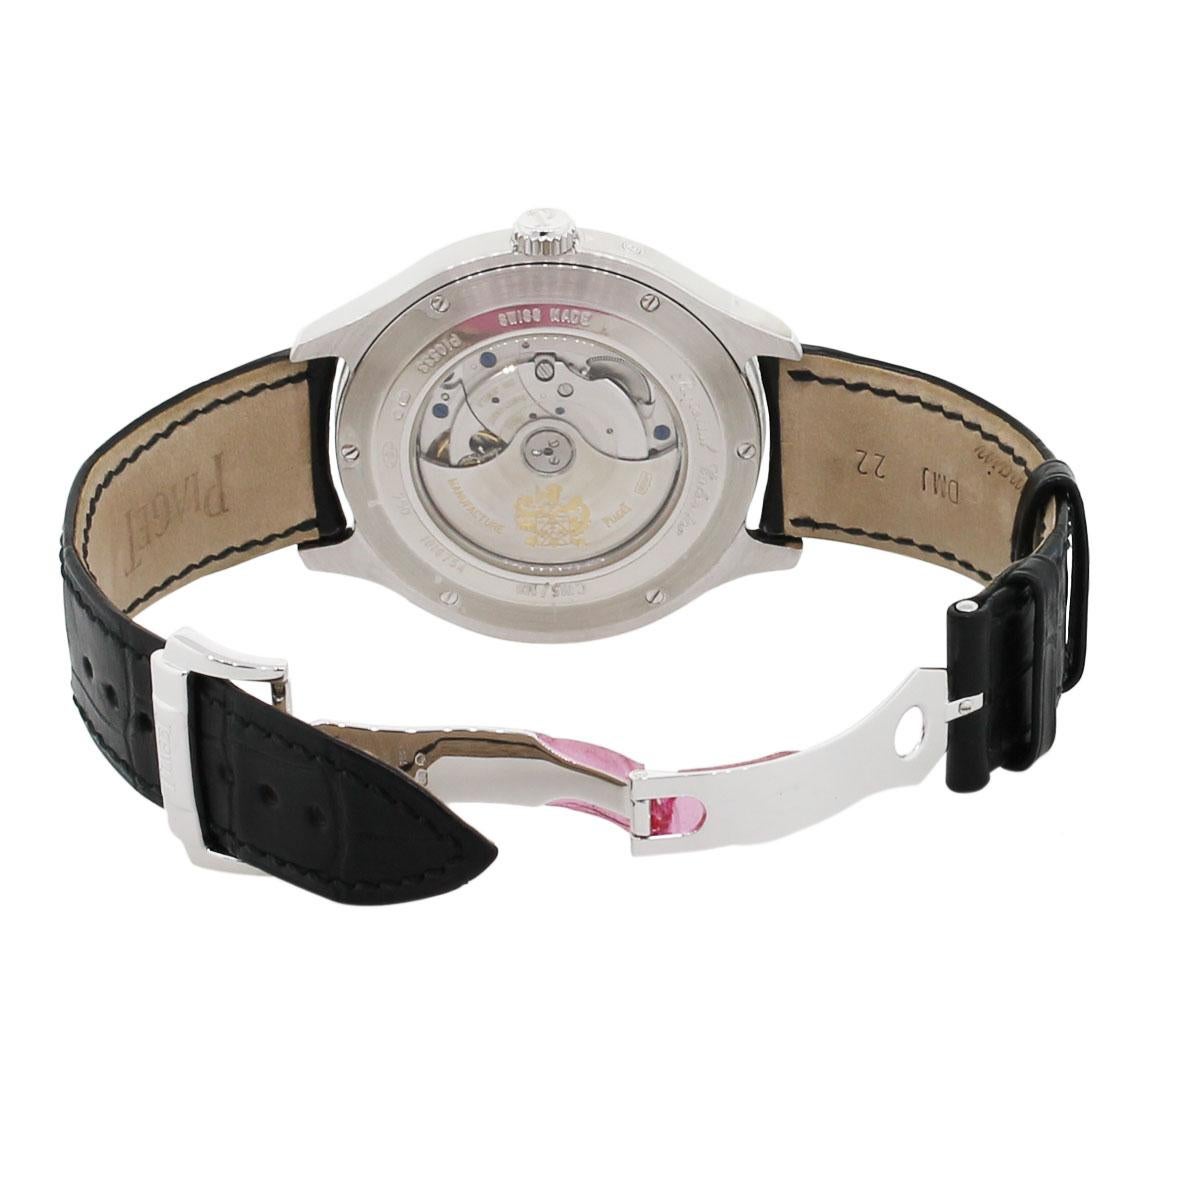 Piaget G0833018 Emperador Perpetual Calendar Wristwatch 1